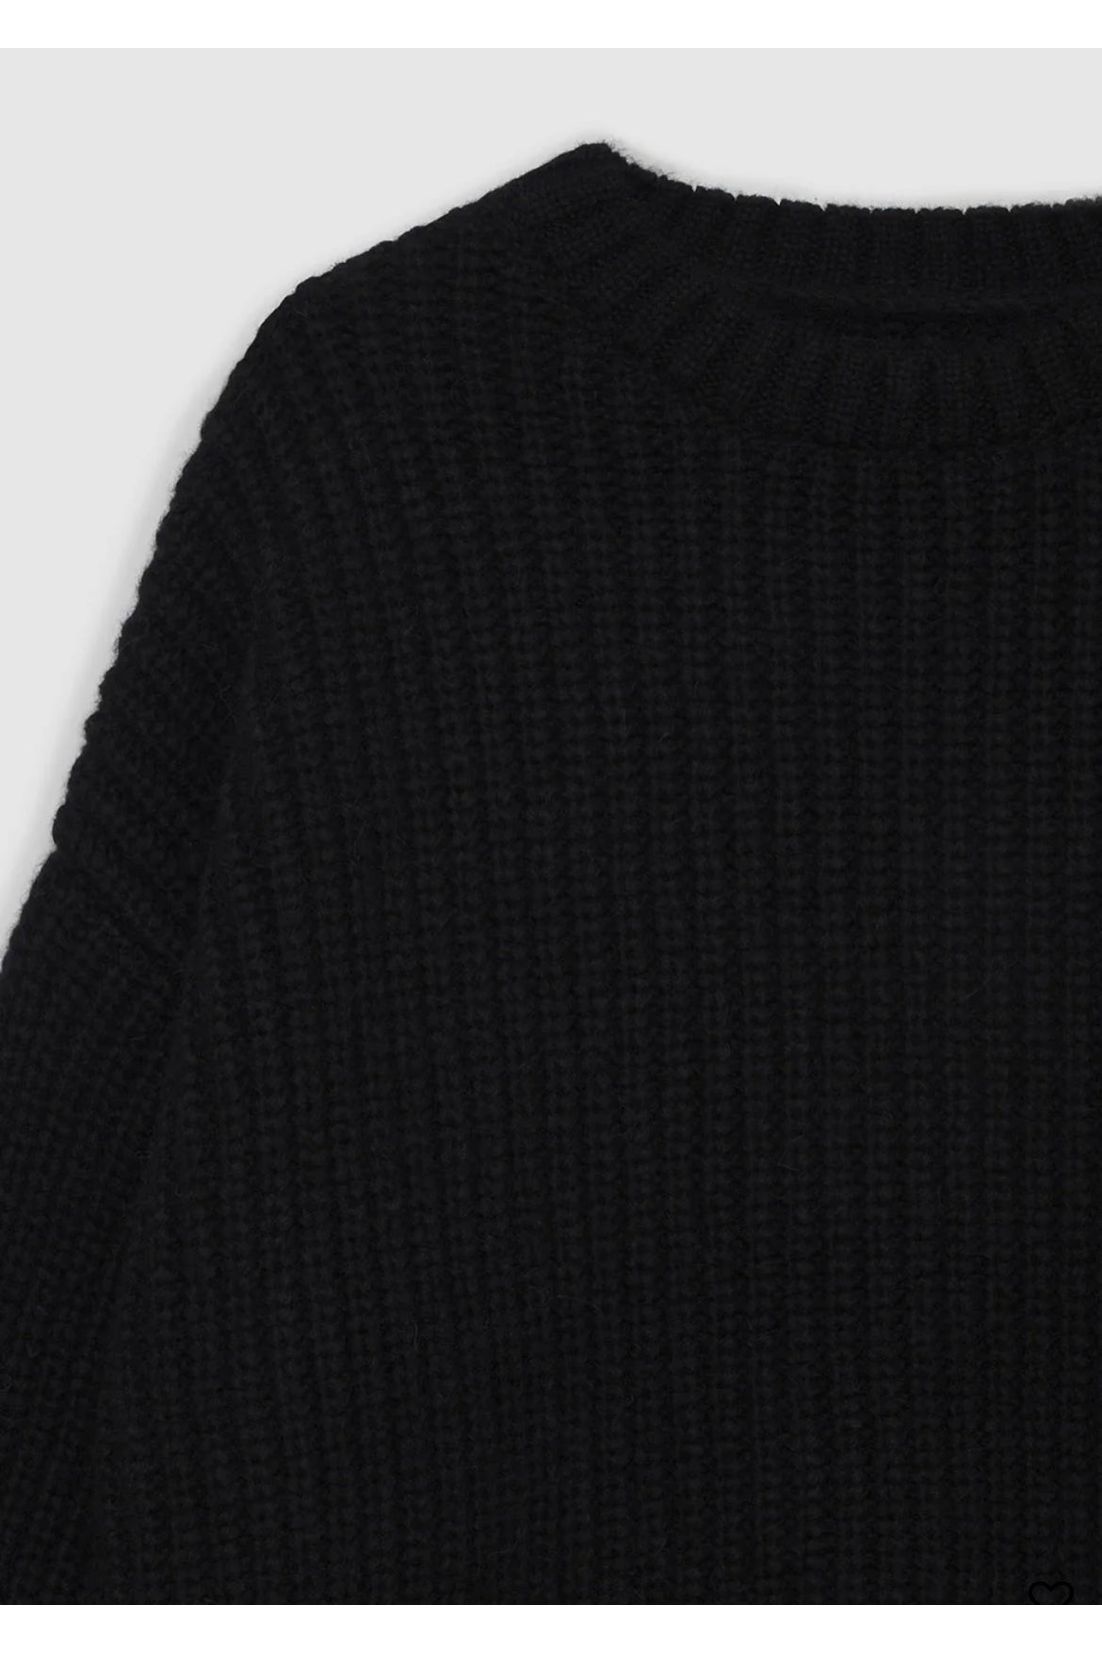 Sydney Crew Sweater in Black by Anine Bing